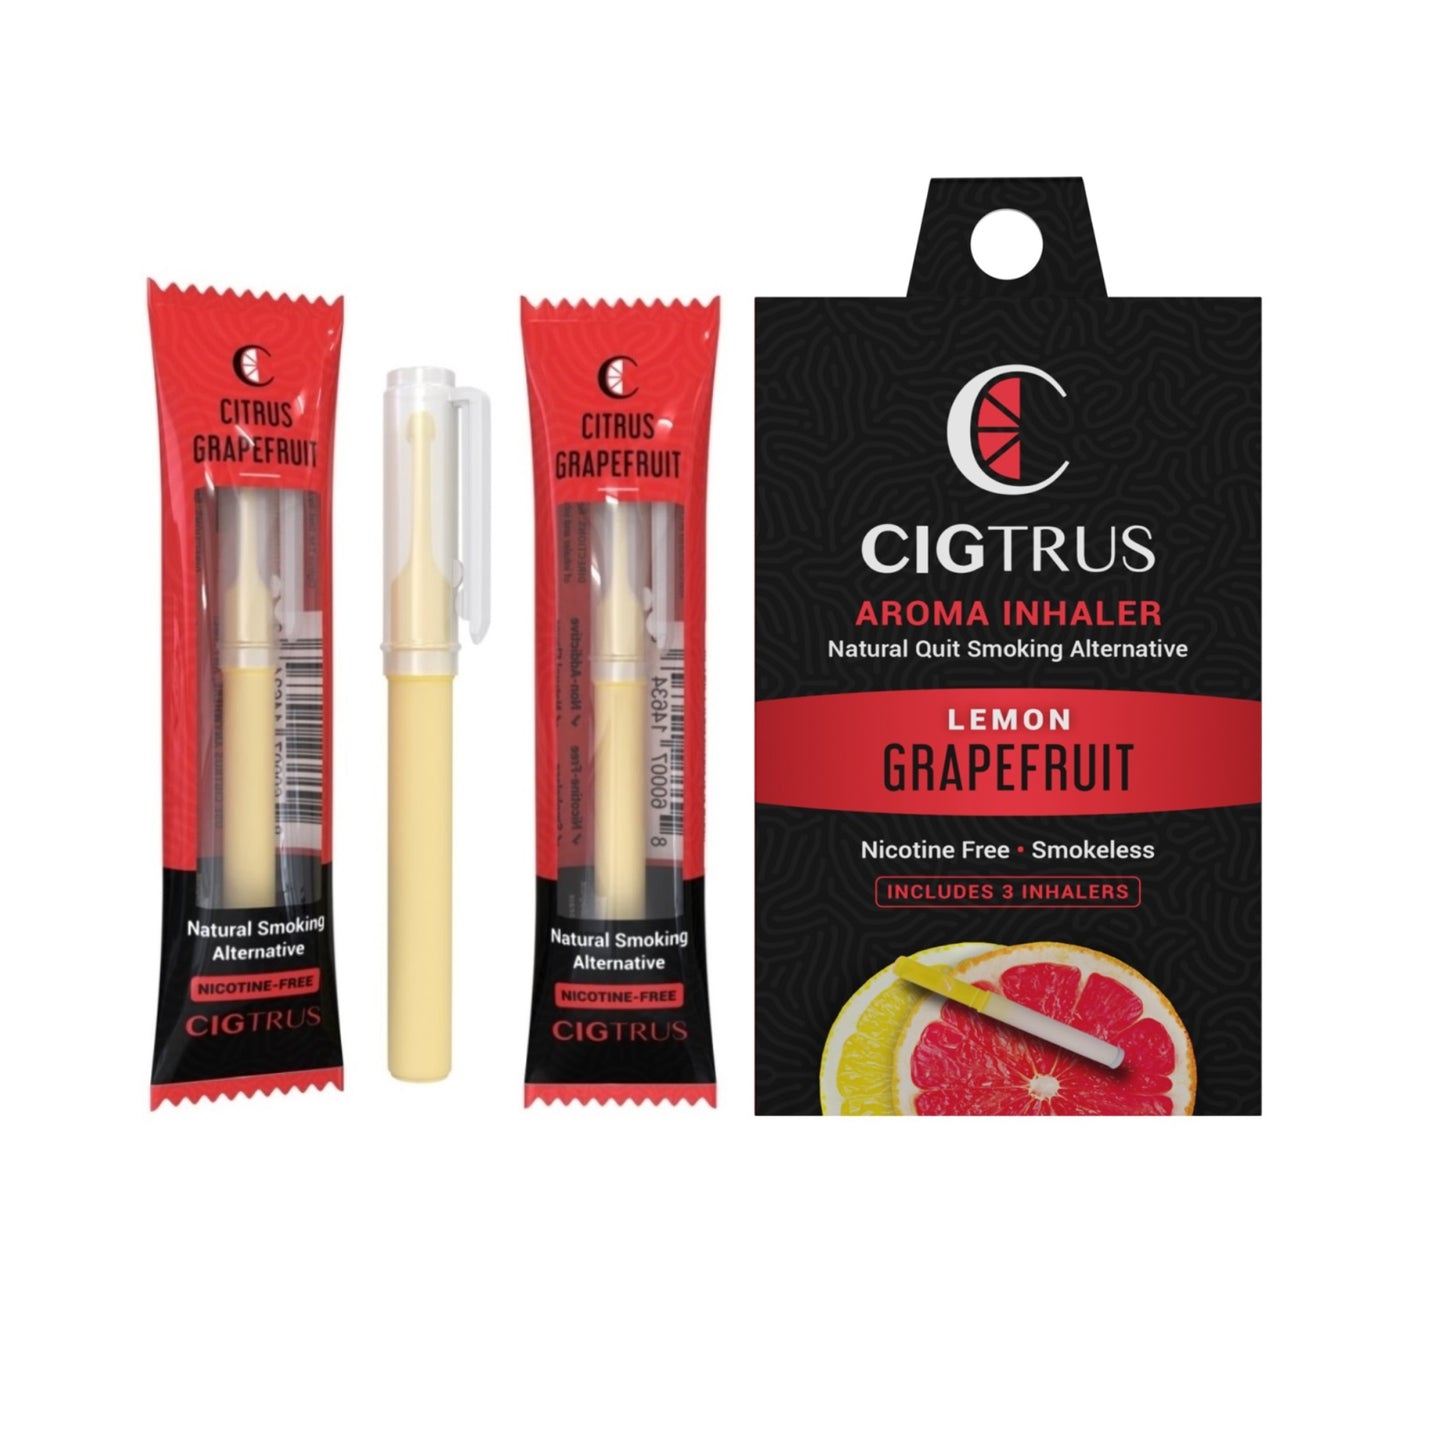 Cigtrus 3 Pack Citrus Grapefruit Flavor - Smokeless Nicotine-Free Inhaler: Your Healthier Alternative to Quit Smoking. Replace Smoking Habit, Satisfy Oral Fixation, and Cravings